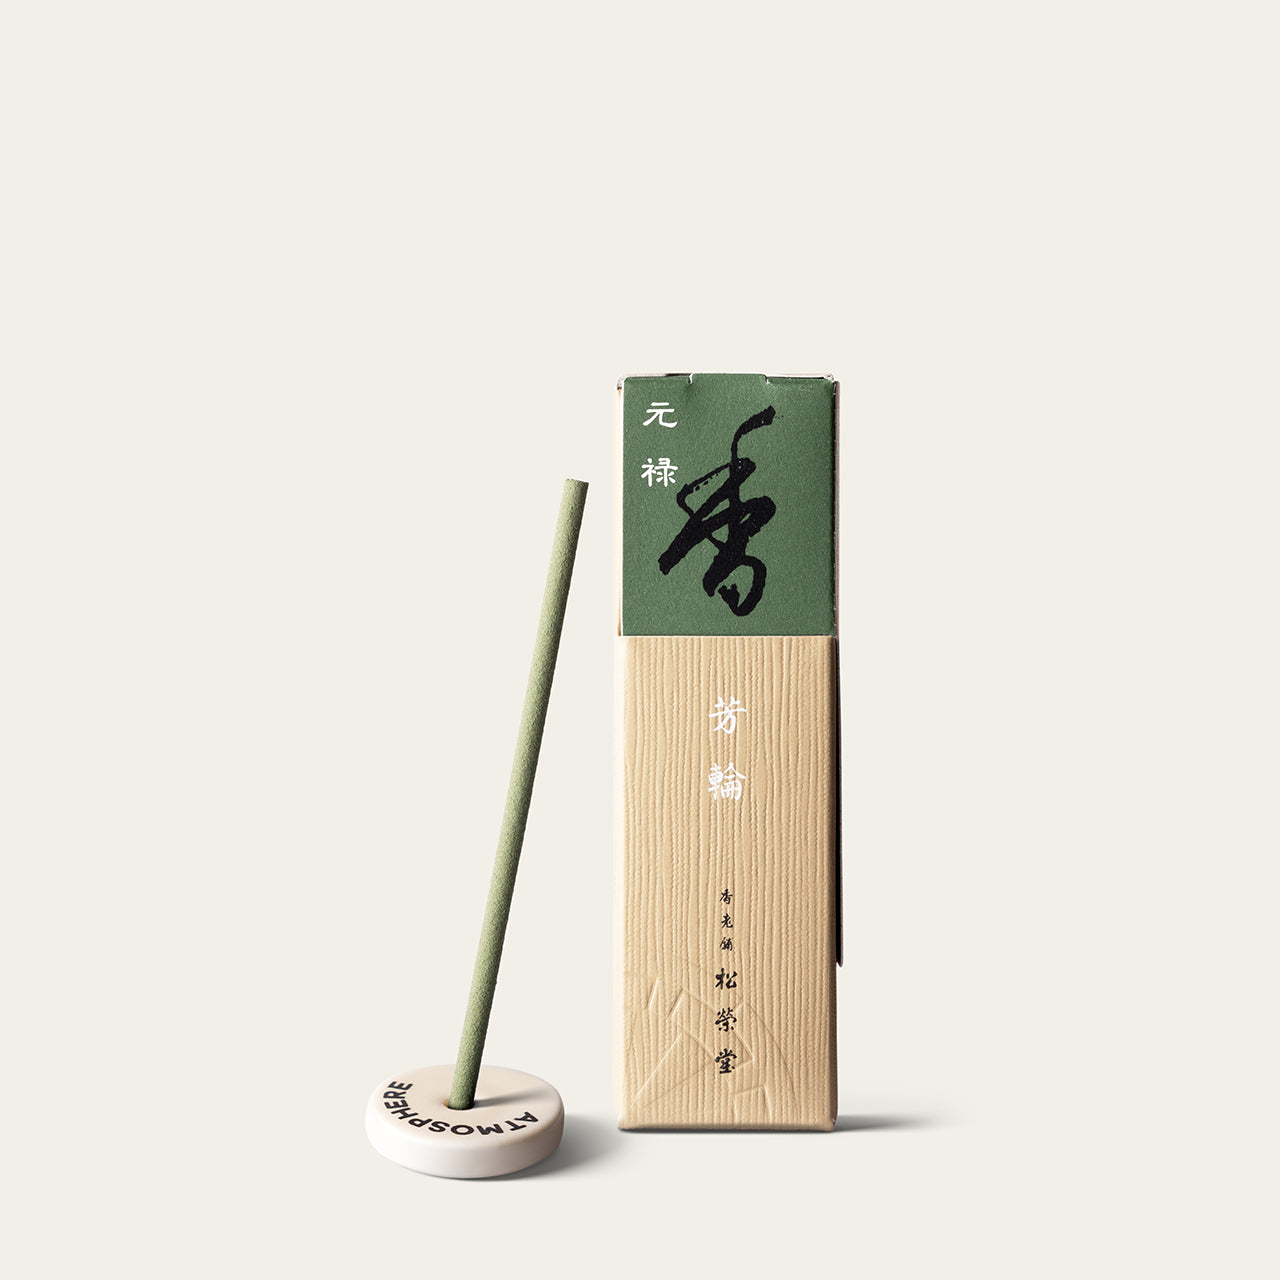 Shoyeido Horin Returning Spirit Genroku Japanese incense sticks (20 sticks) with Atmosphere ceramic incense holder